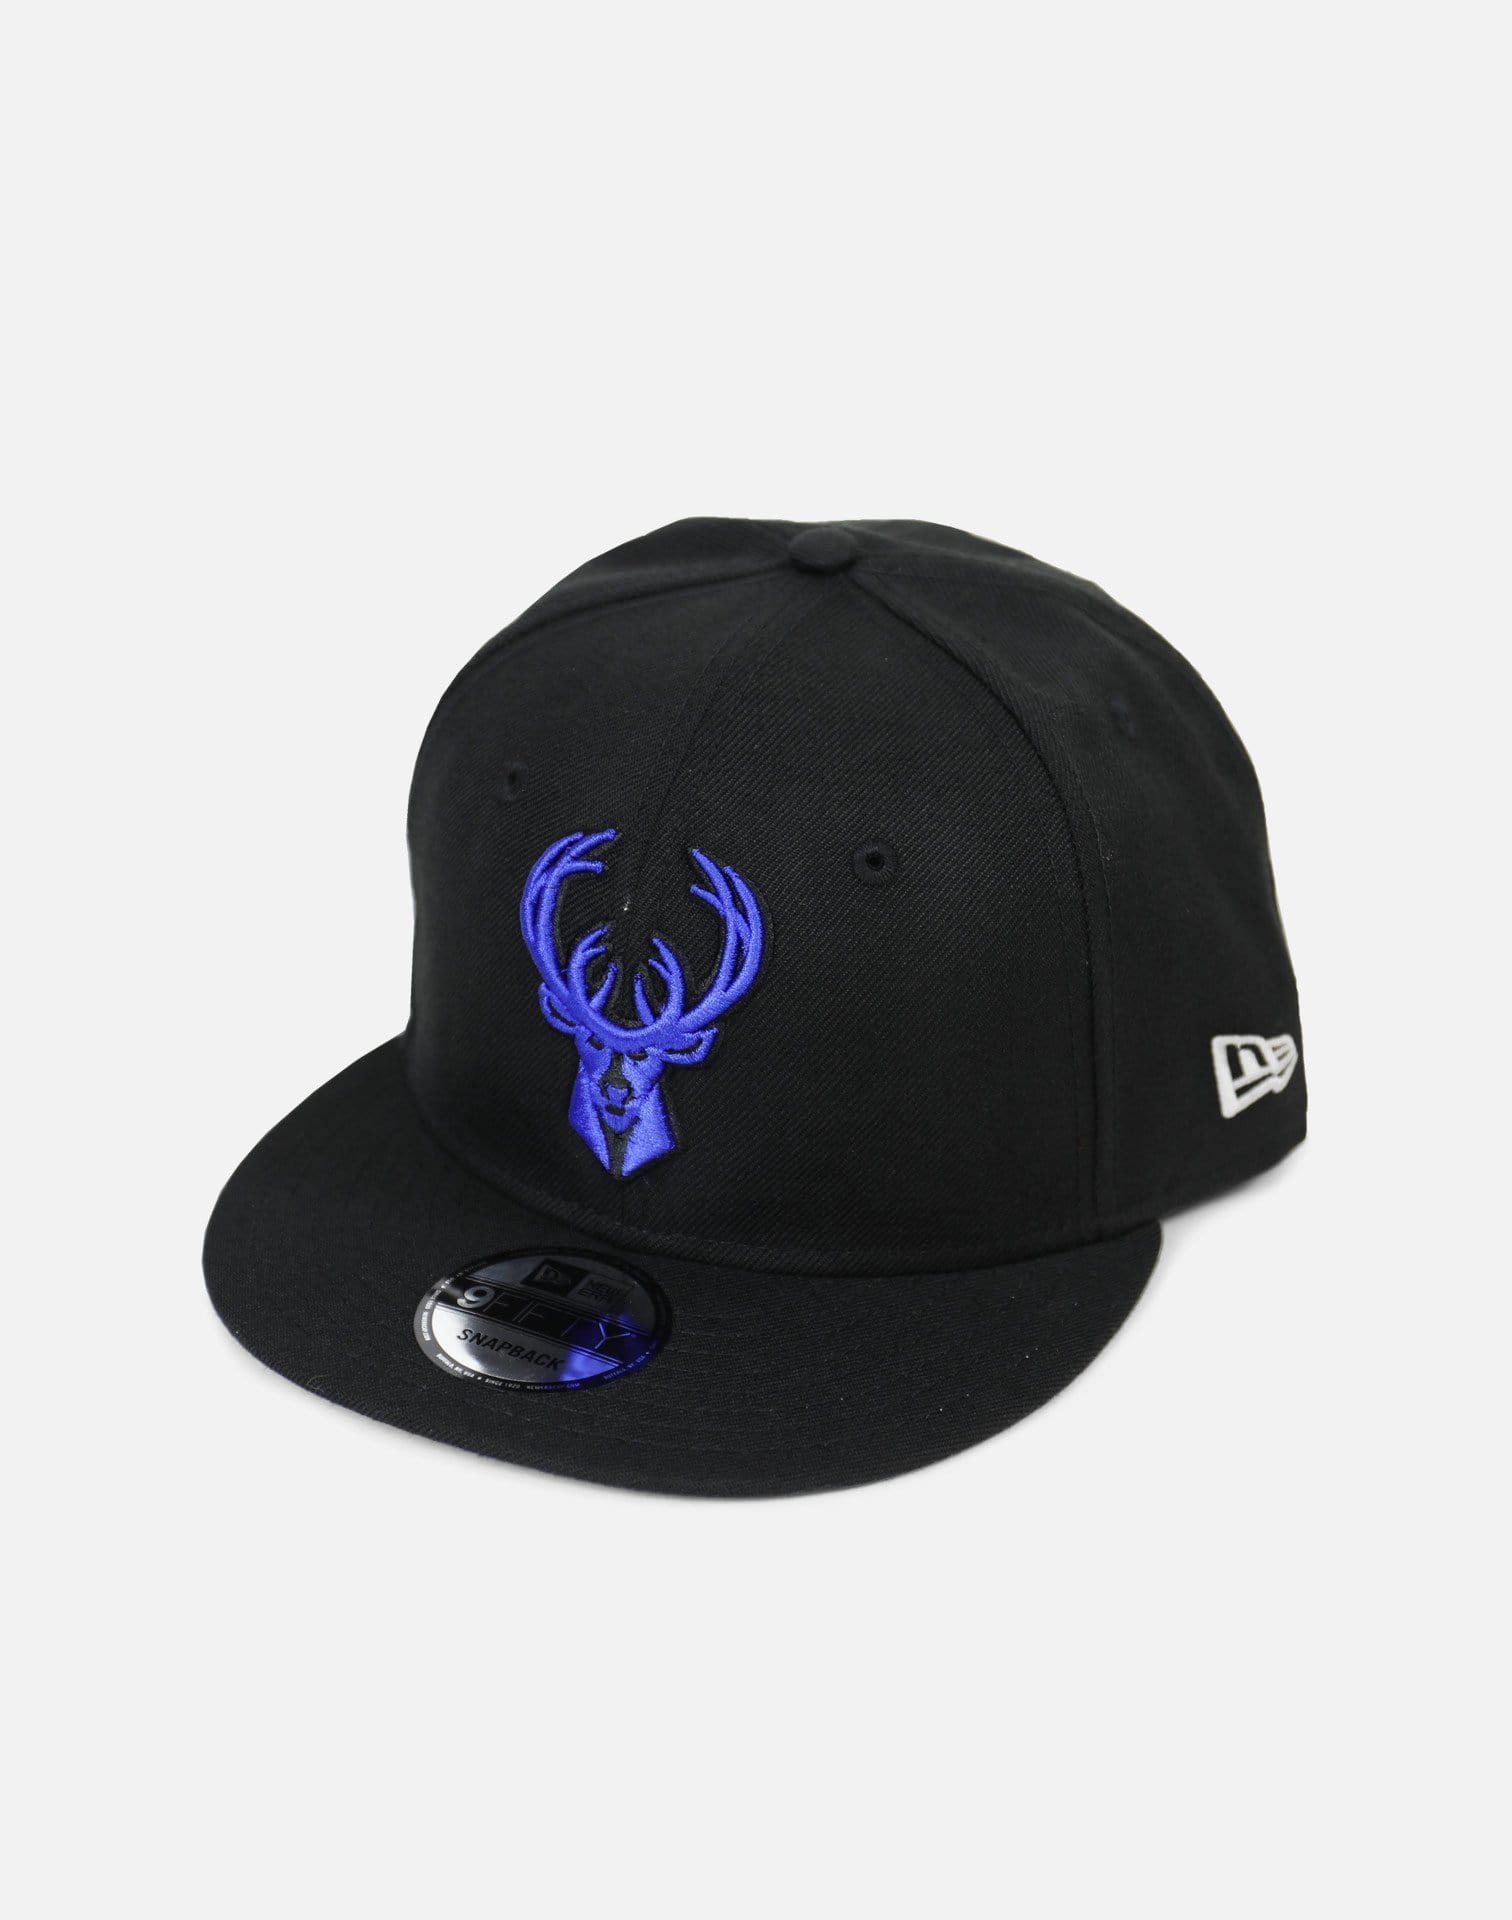 New Era Milwaukee Bucks Royal Hook Snapback Hat (Black/Royal)